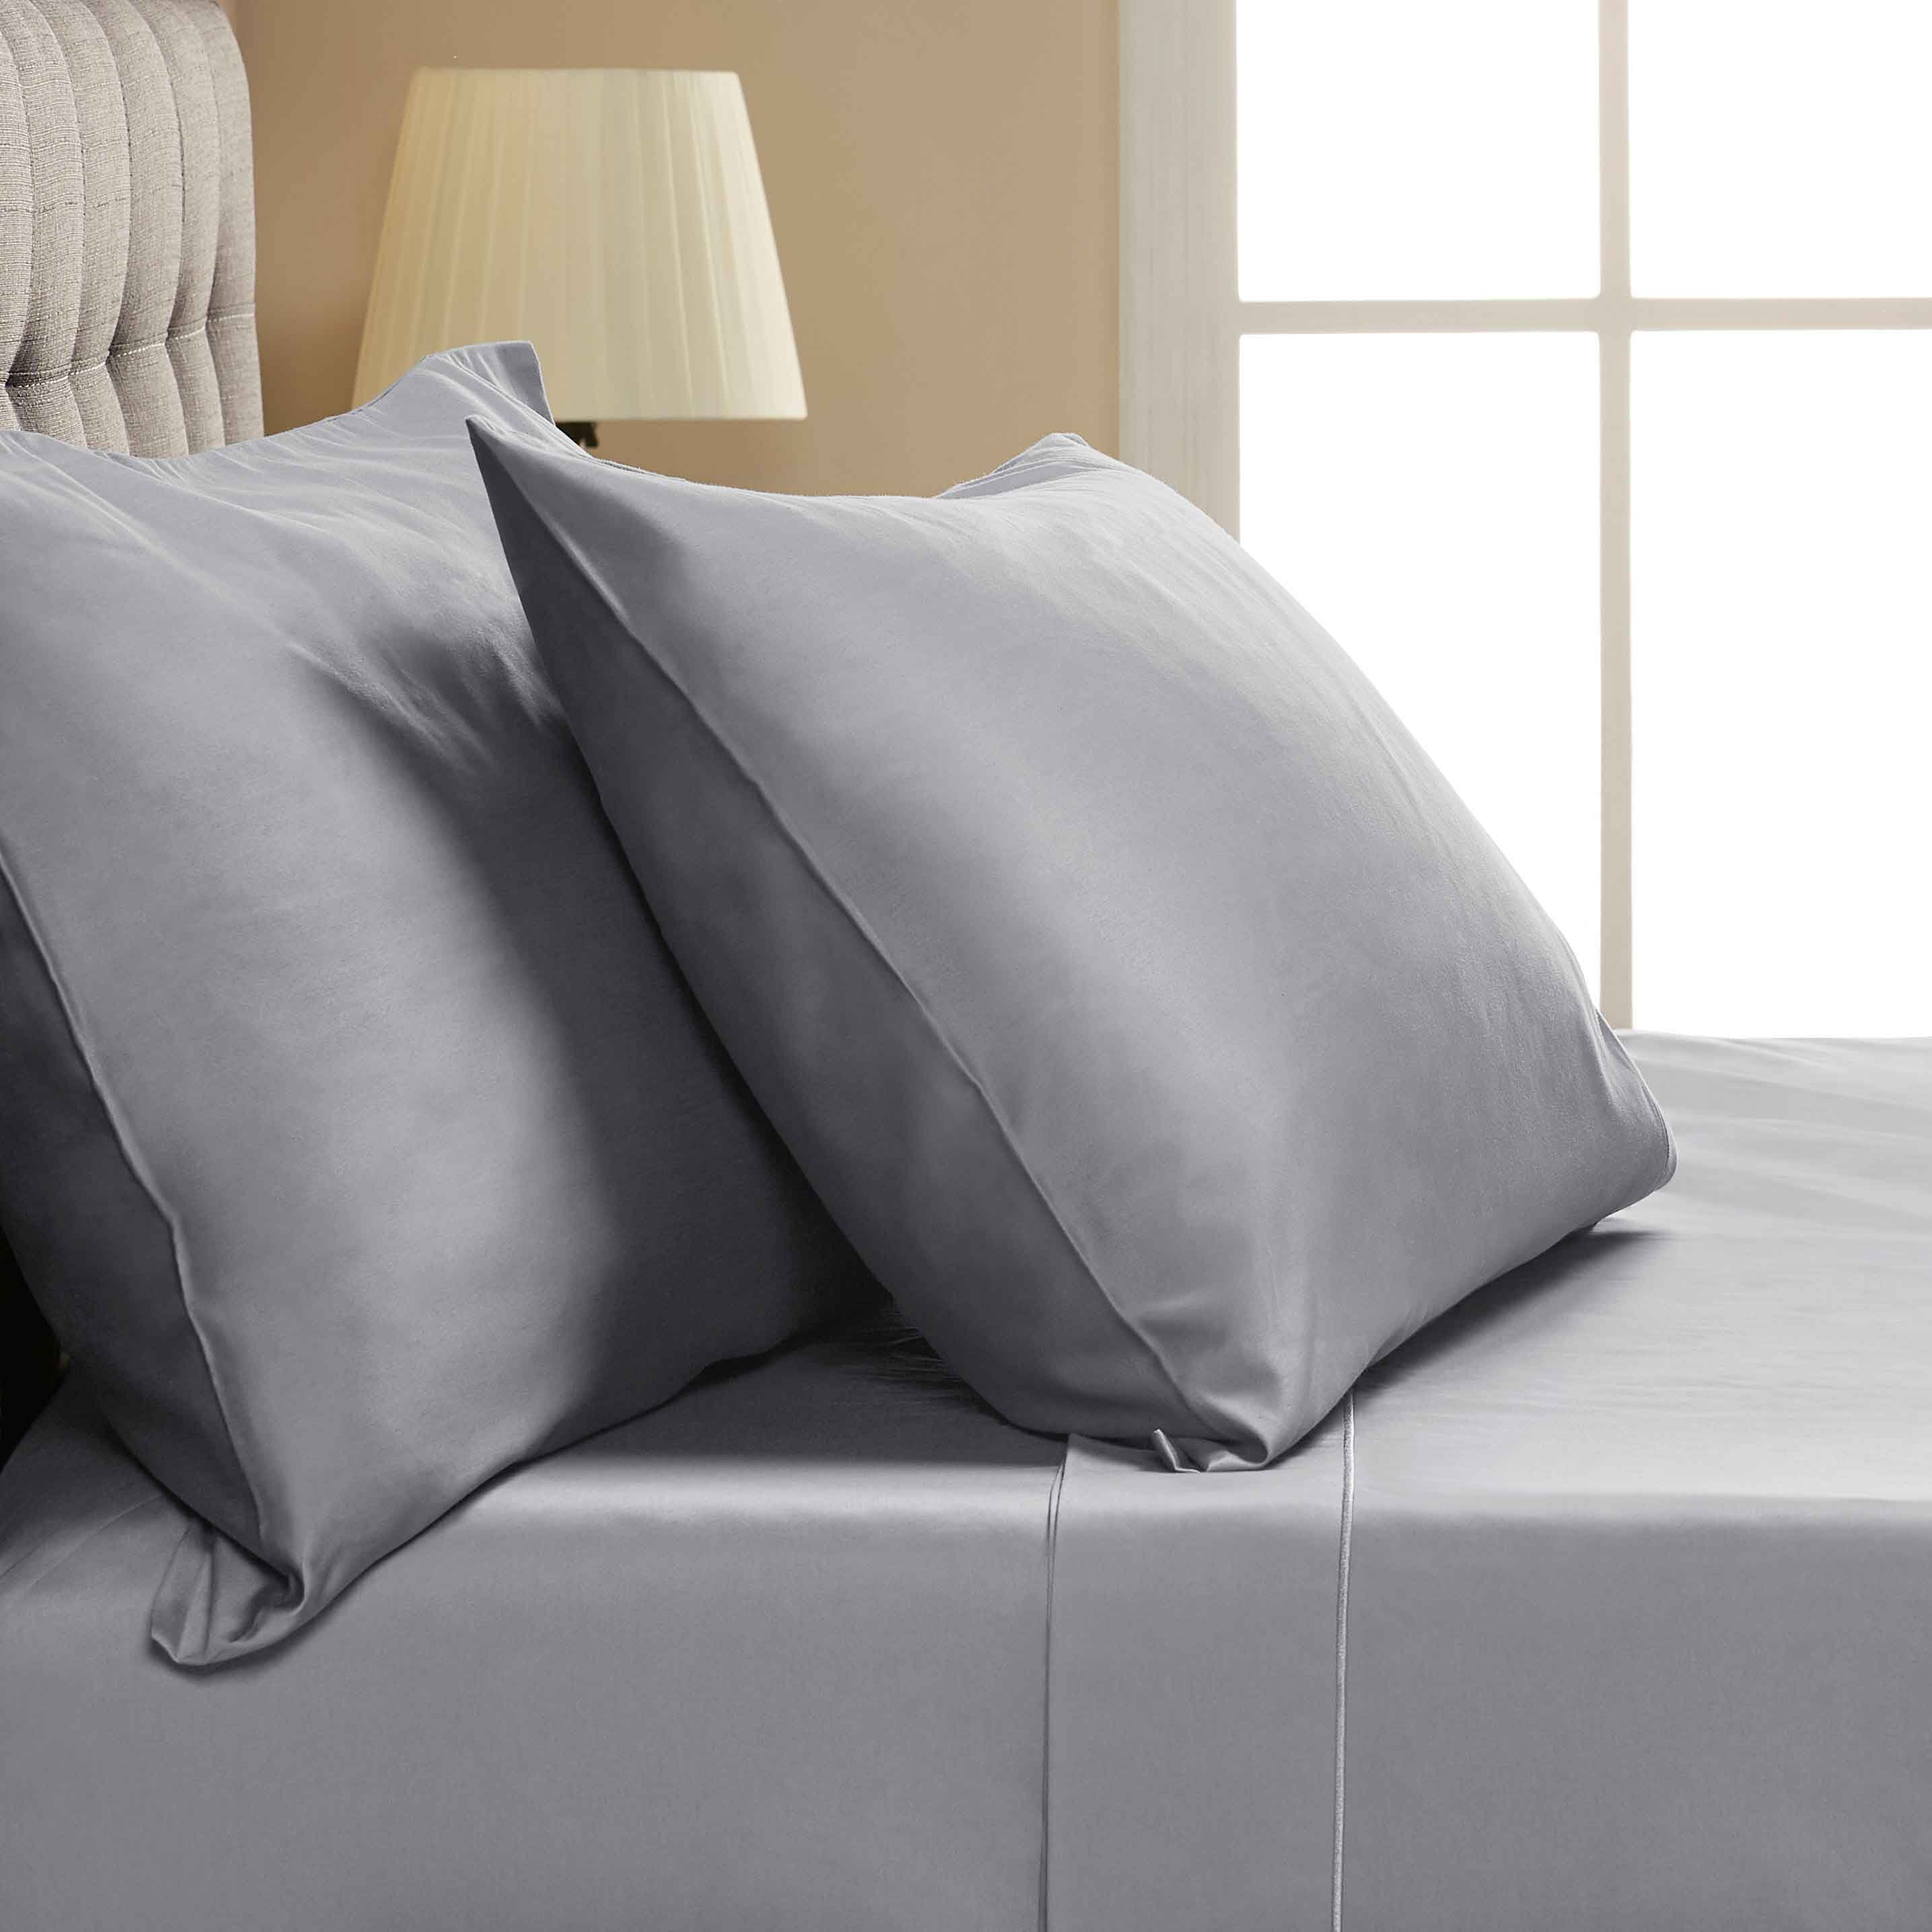 2 PC Half Ruffle Pillow case 1000 TC Soft Egyptian Cotton US Size & Colors 